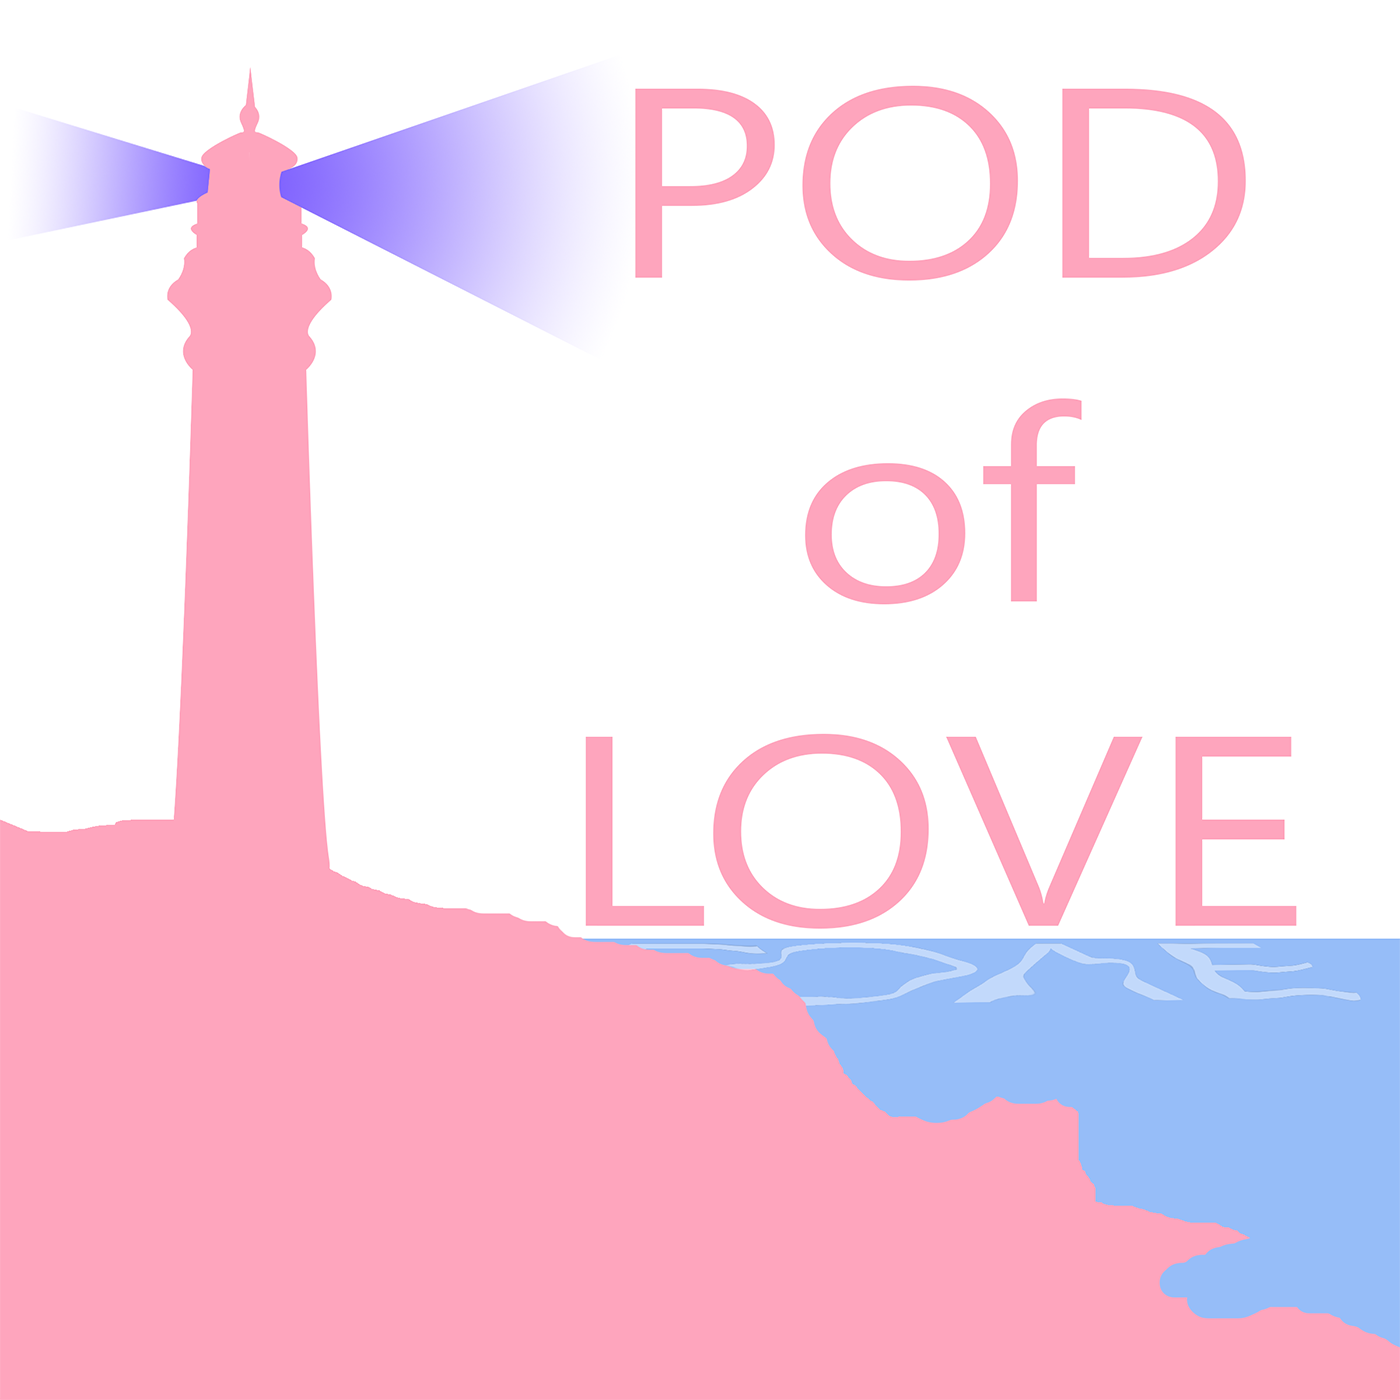 Pod of Love